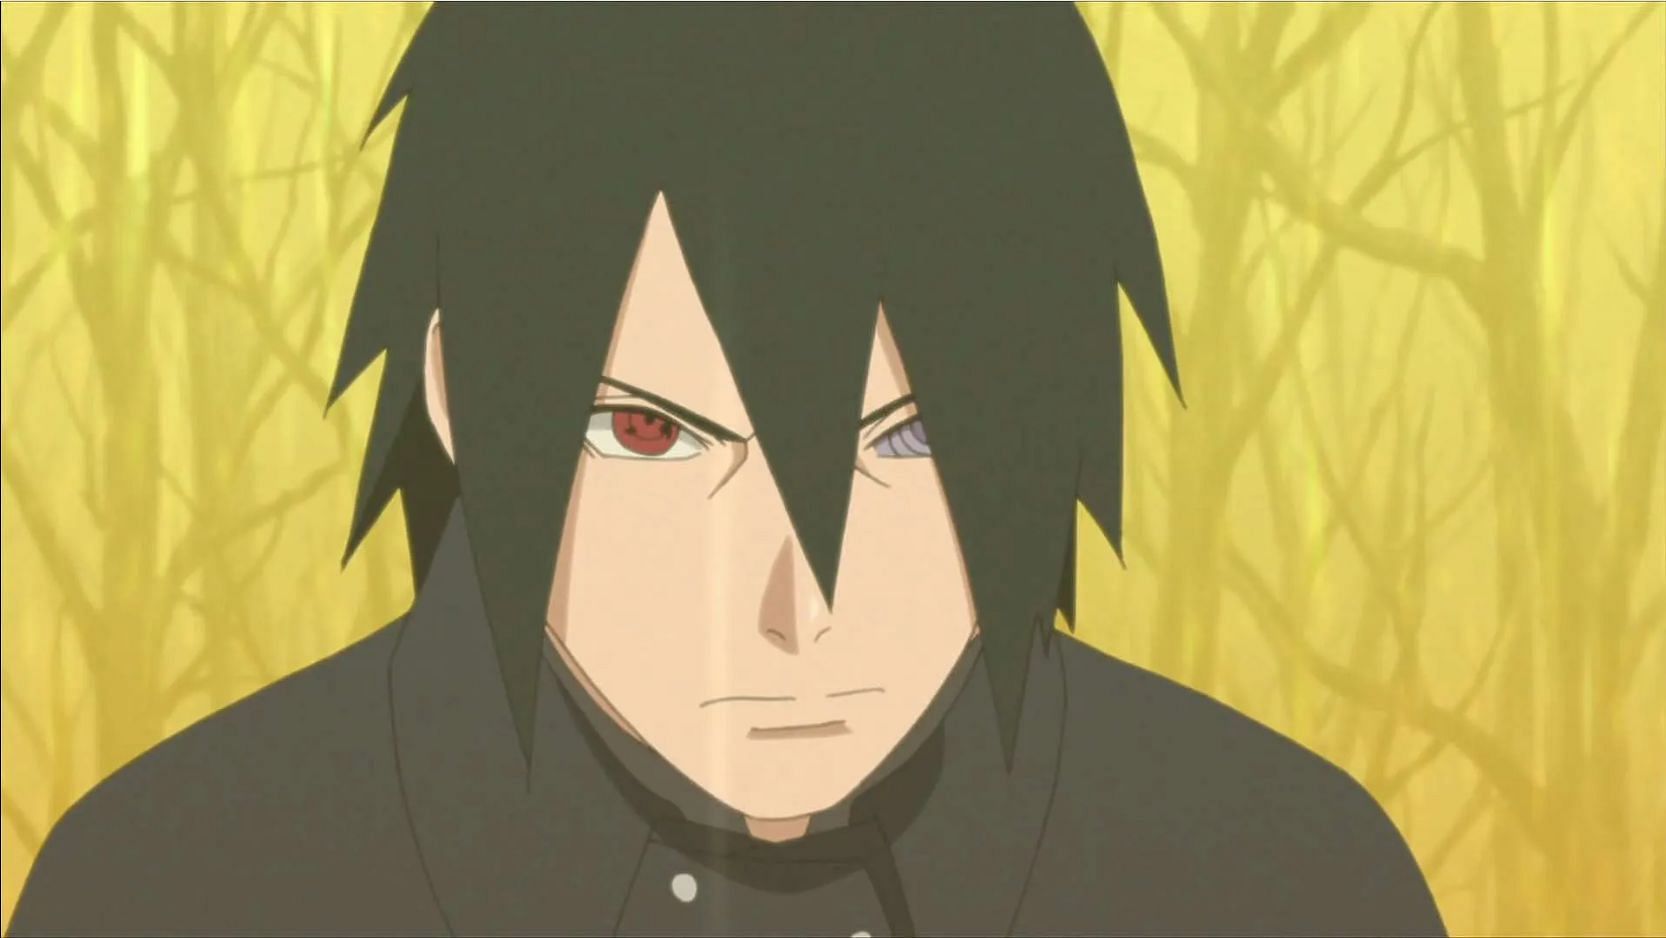 Sasuke as shown in the anime (Image via Naruto)